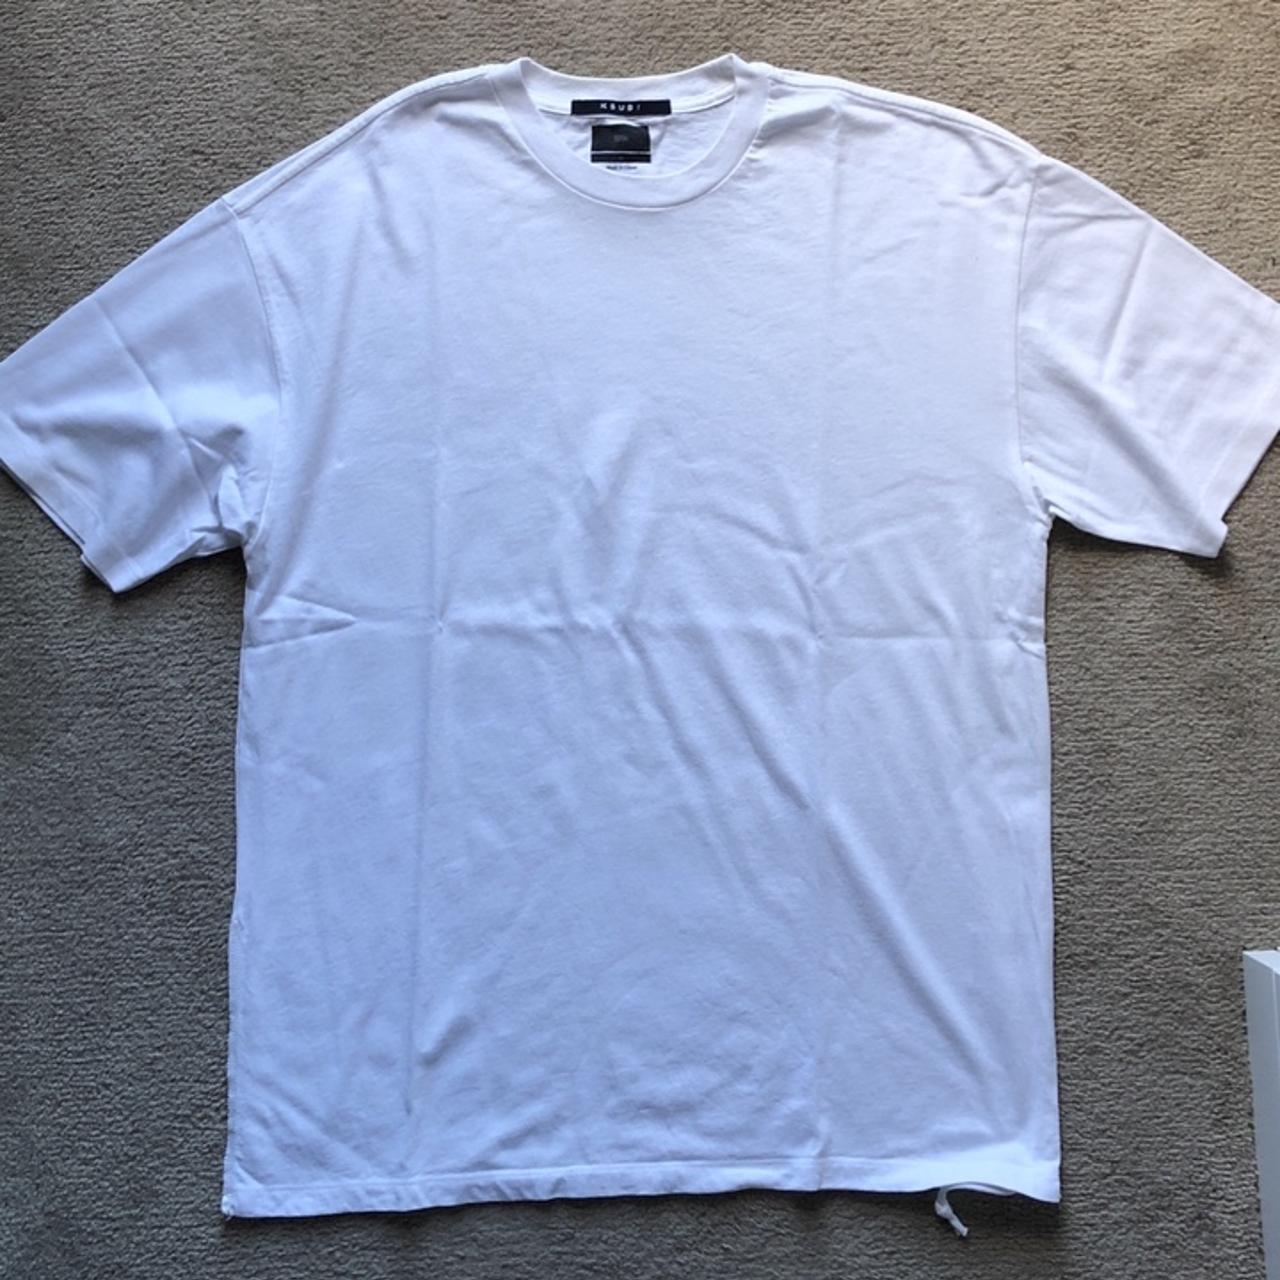 Ksubi Biggie White T-Shirt Size M Condition: 9/10... - Depop